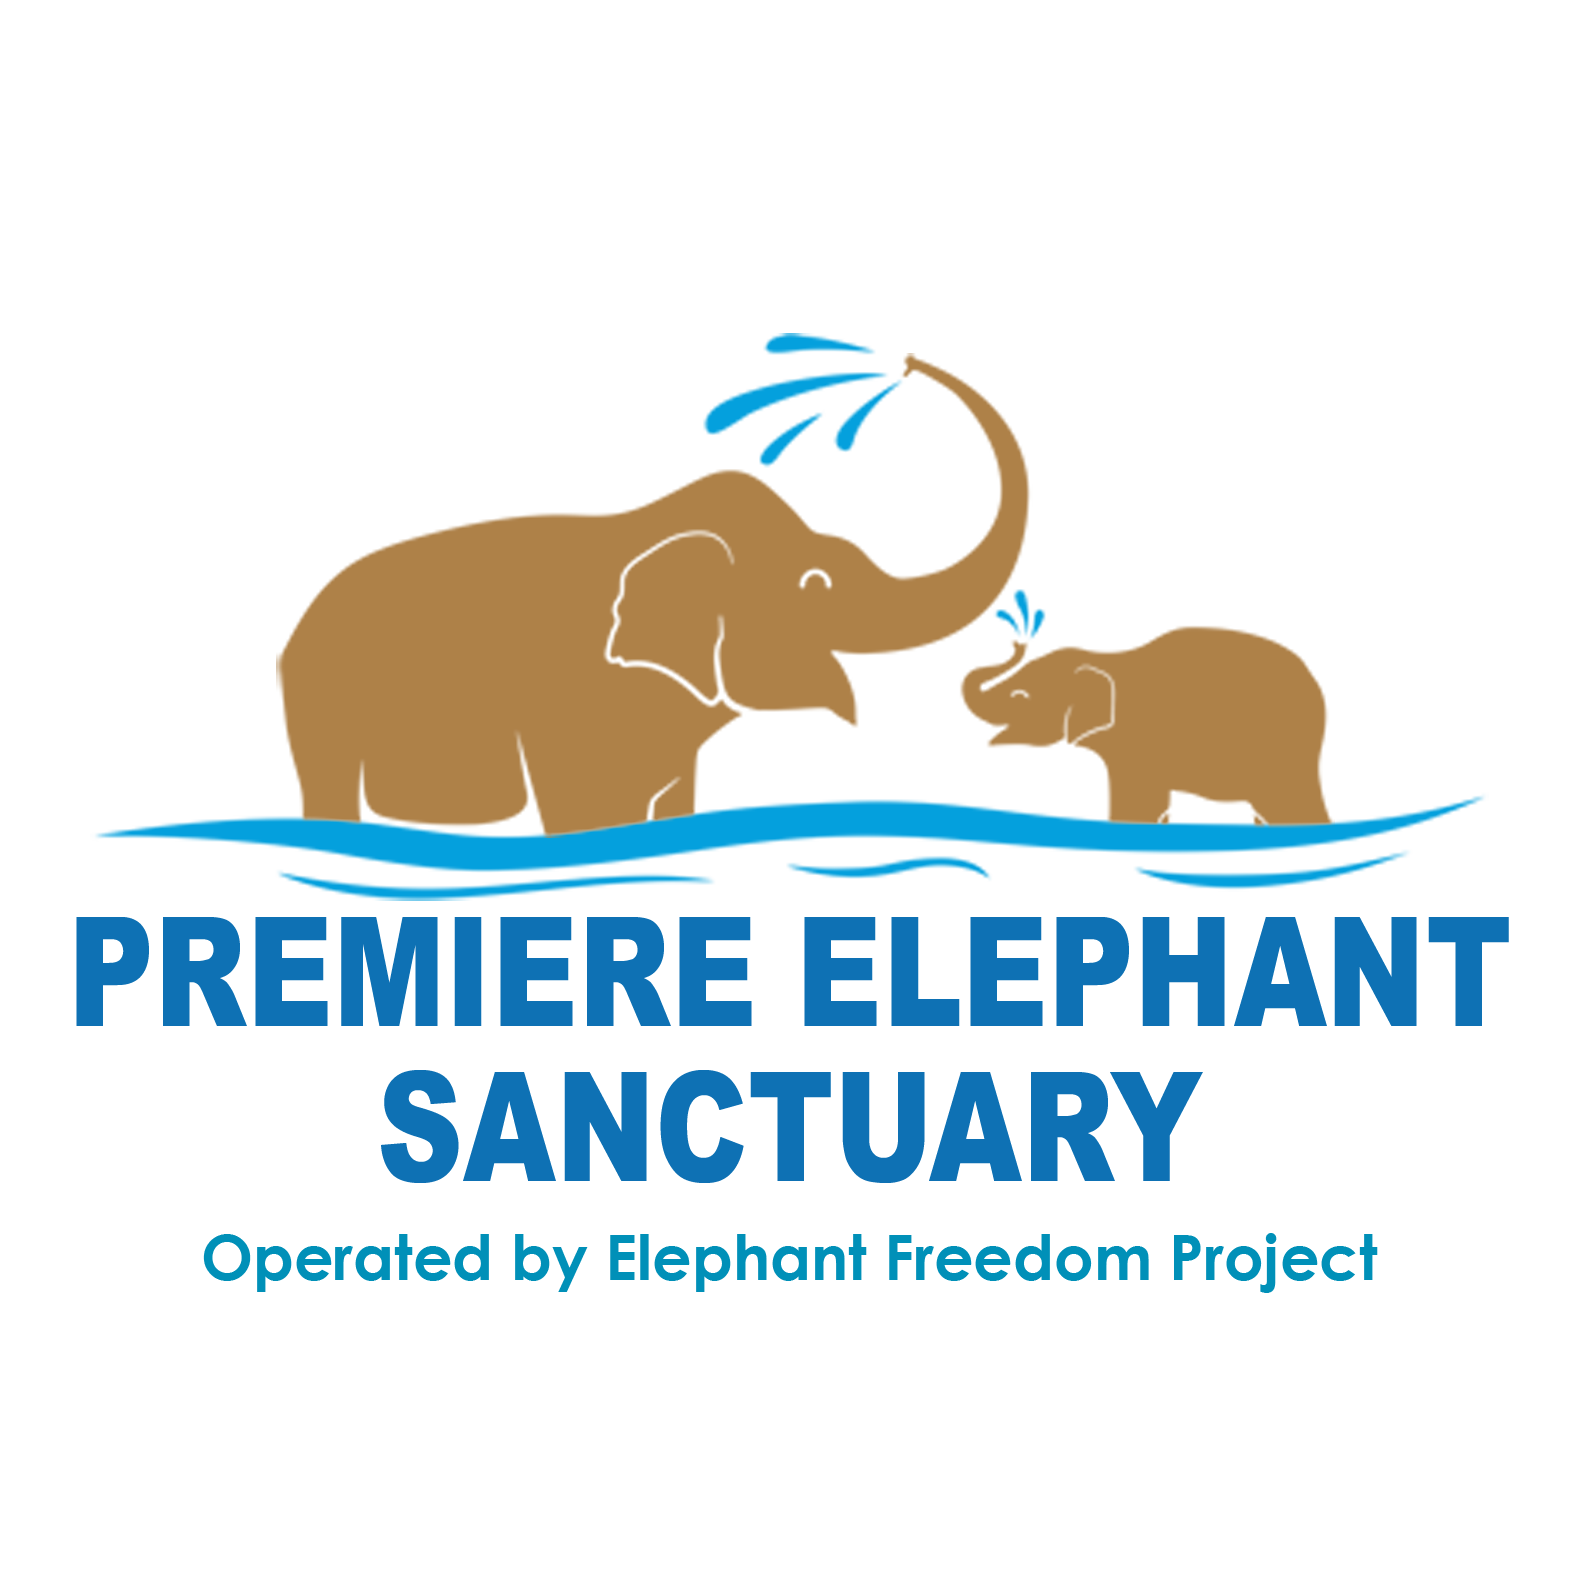 Elephant Sanctuary Volunteer Thailand